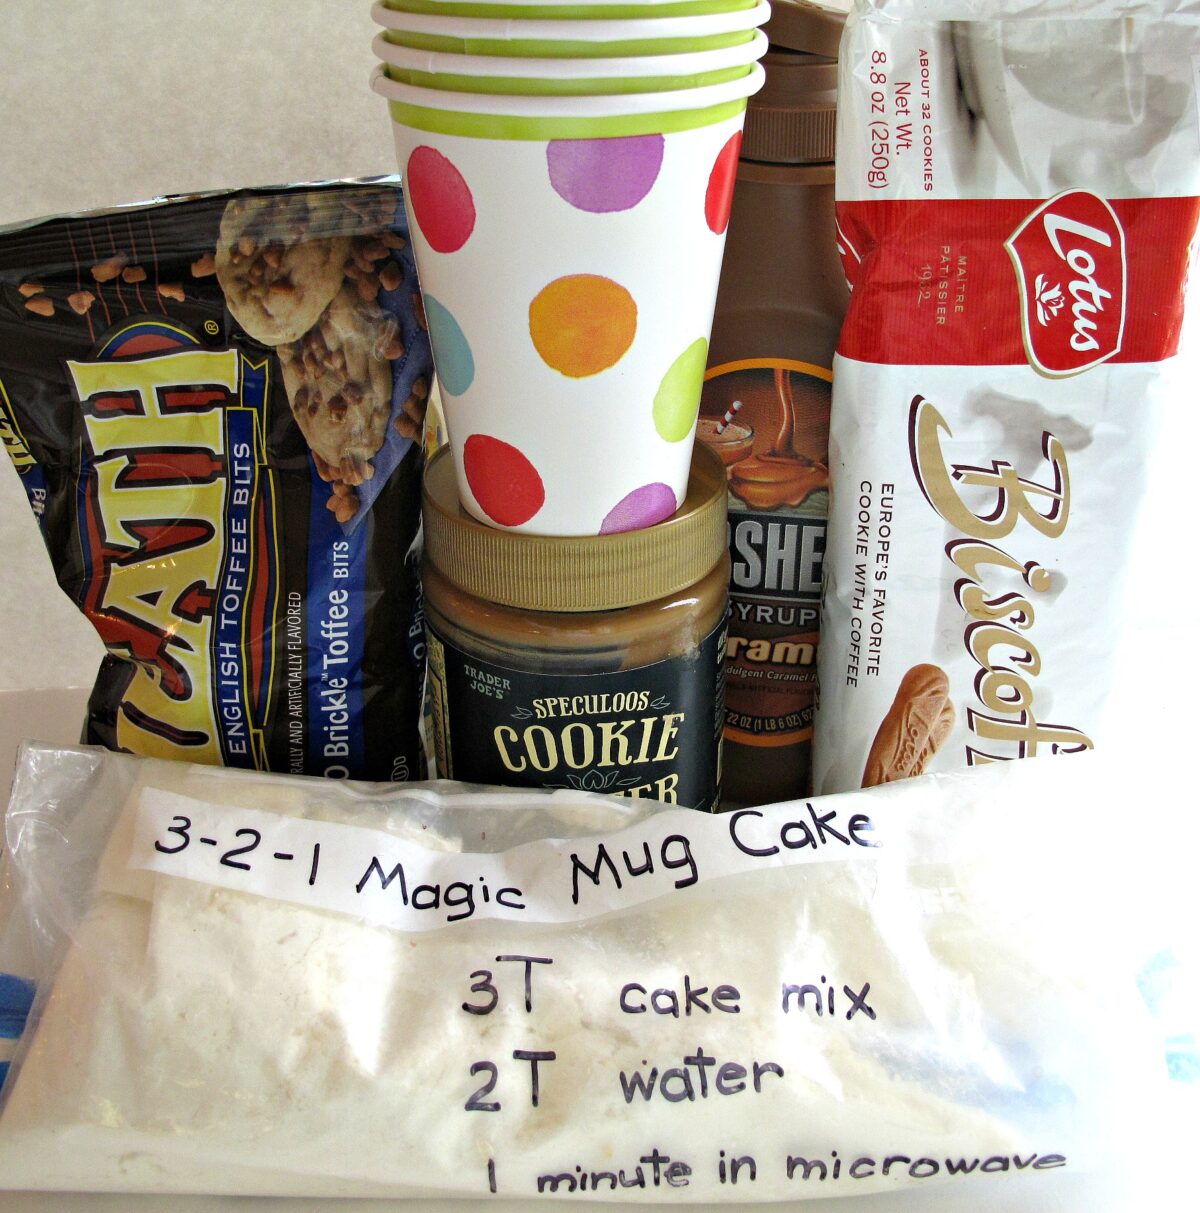 Ingredients: toffee bits, biscoff cookie butter, biscoff cookies, caramel syrup, mug cake mix.